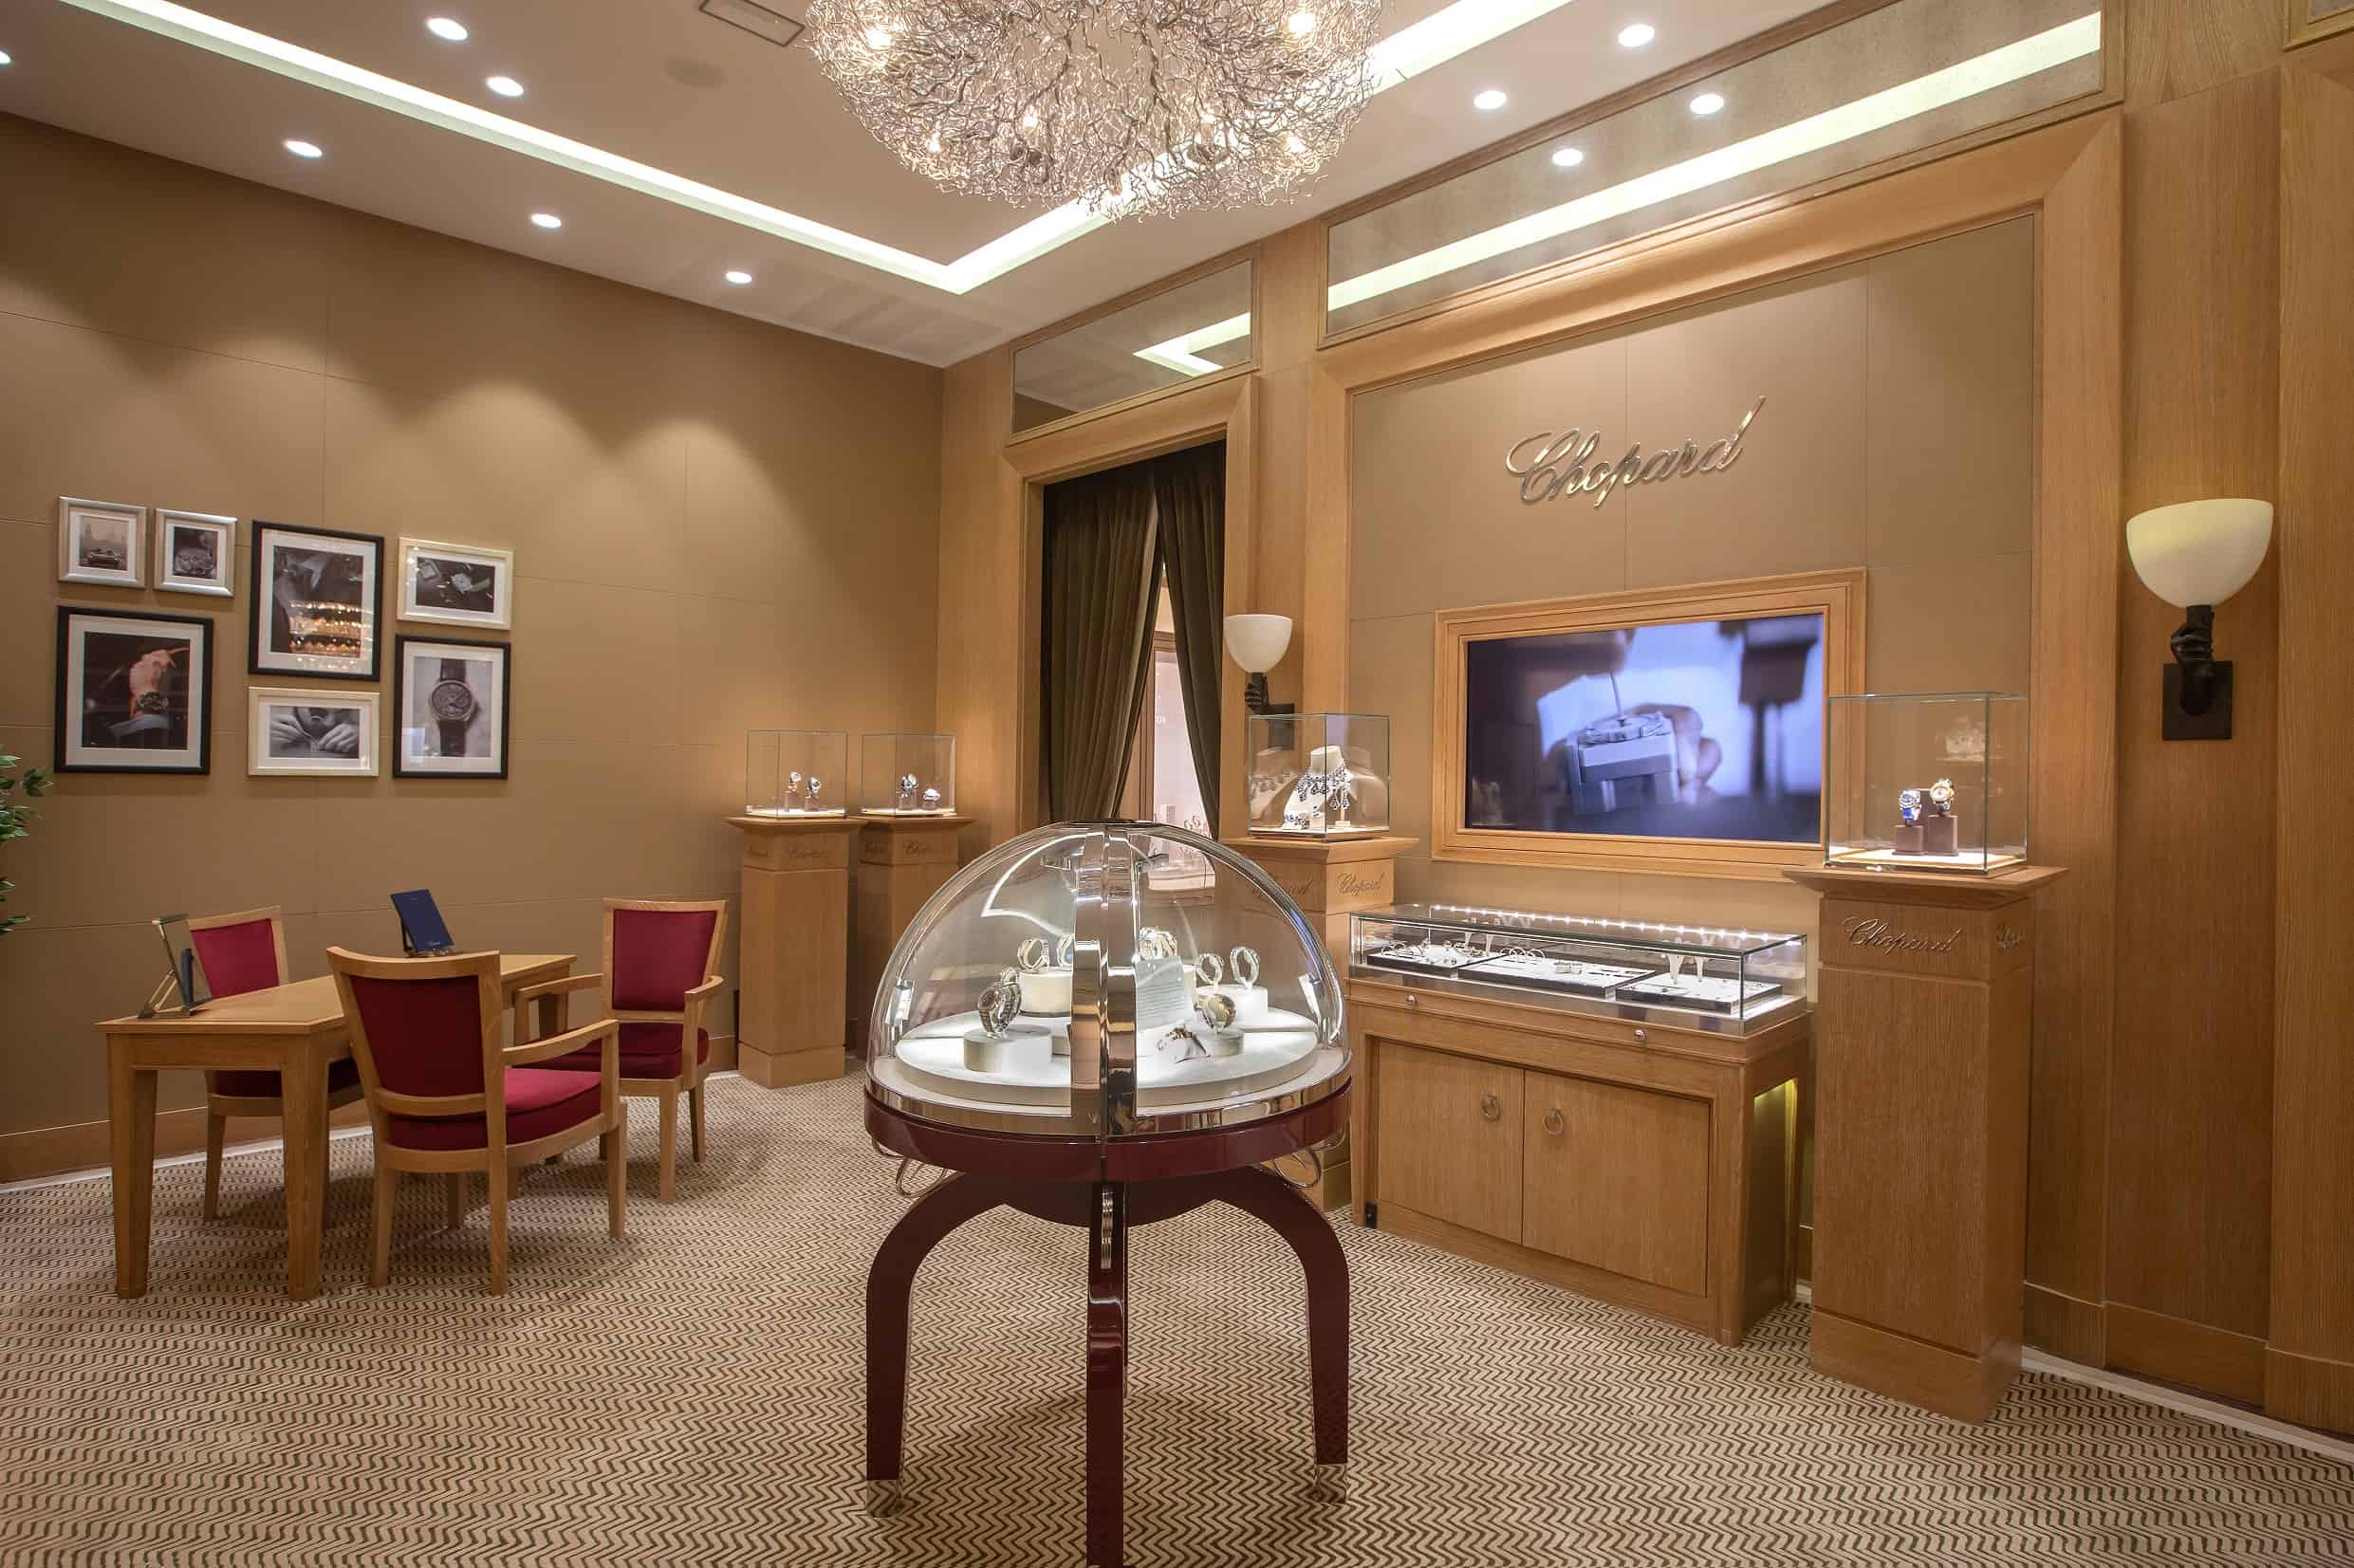 Chopard abre un novo showroom en Doha Festival City